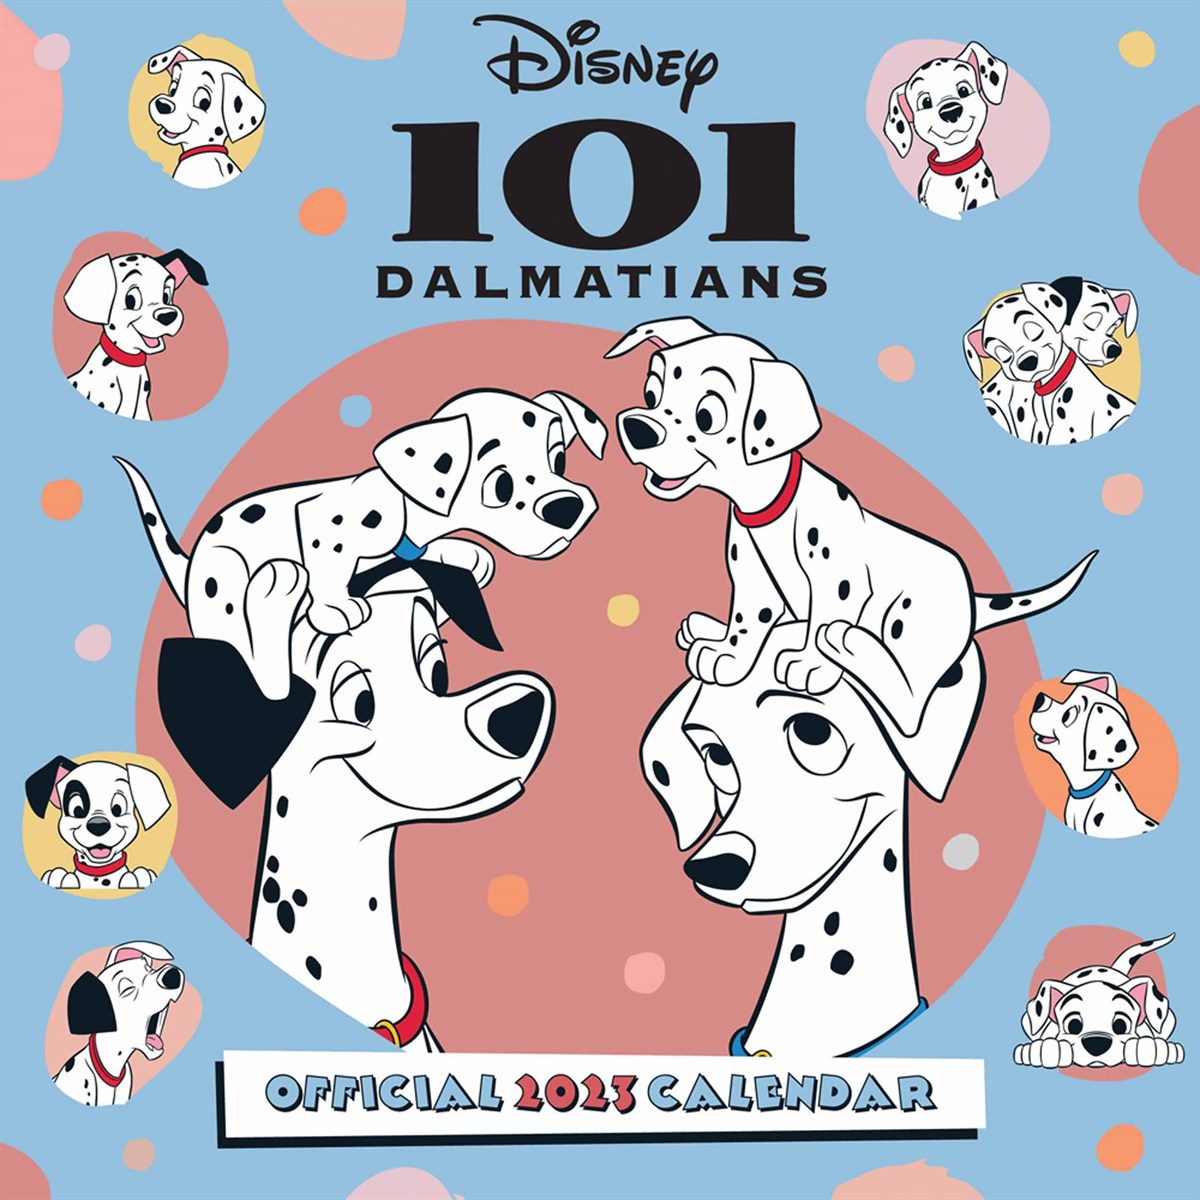 where does 101 dalmatians take place